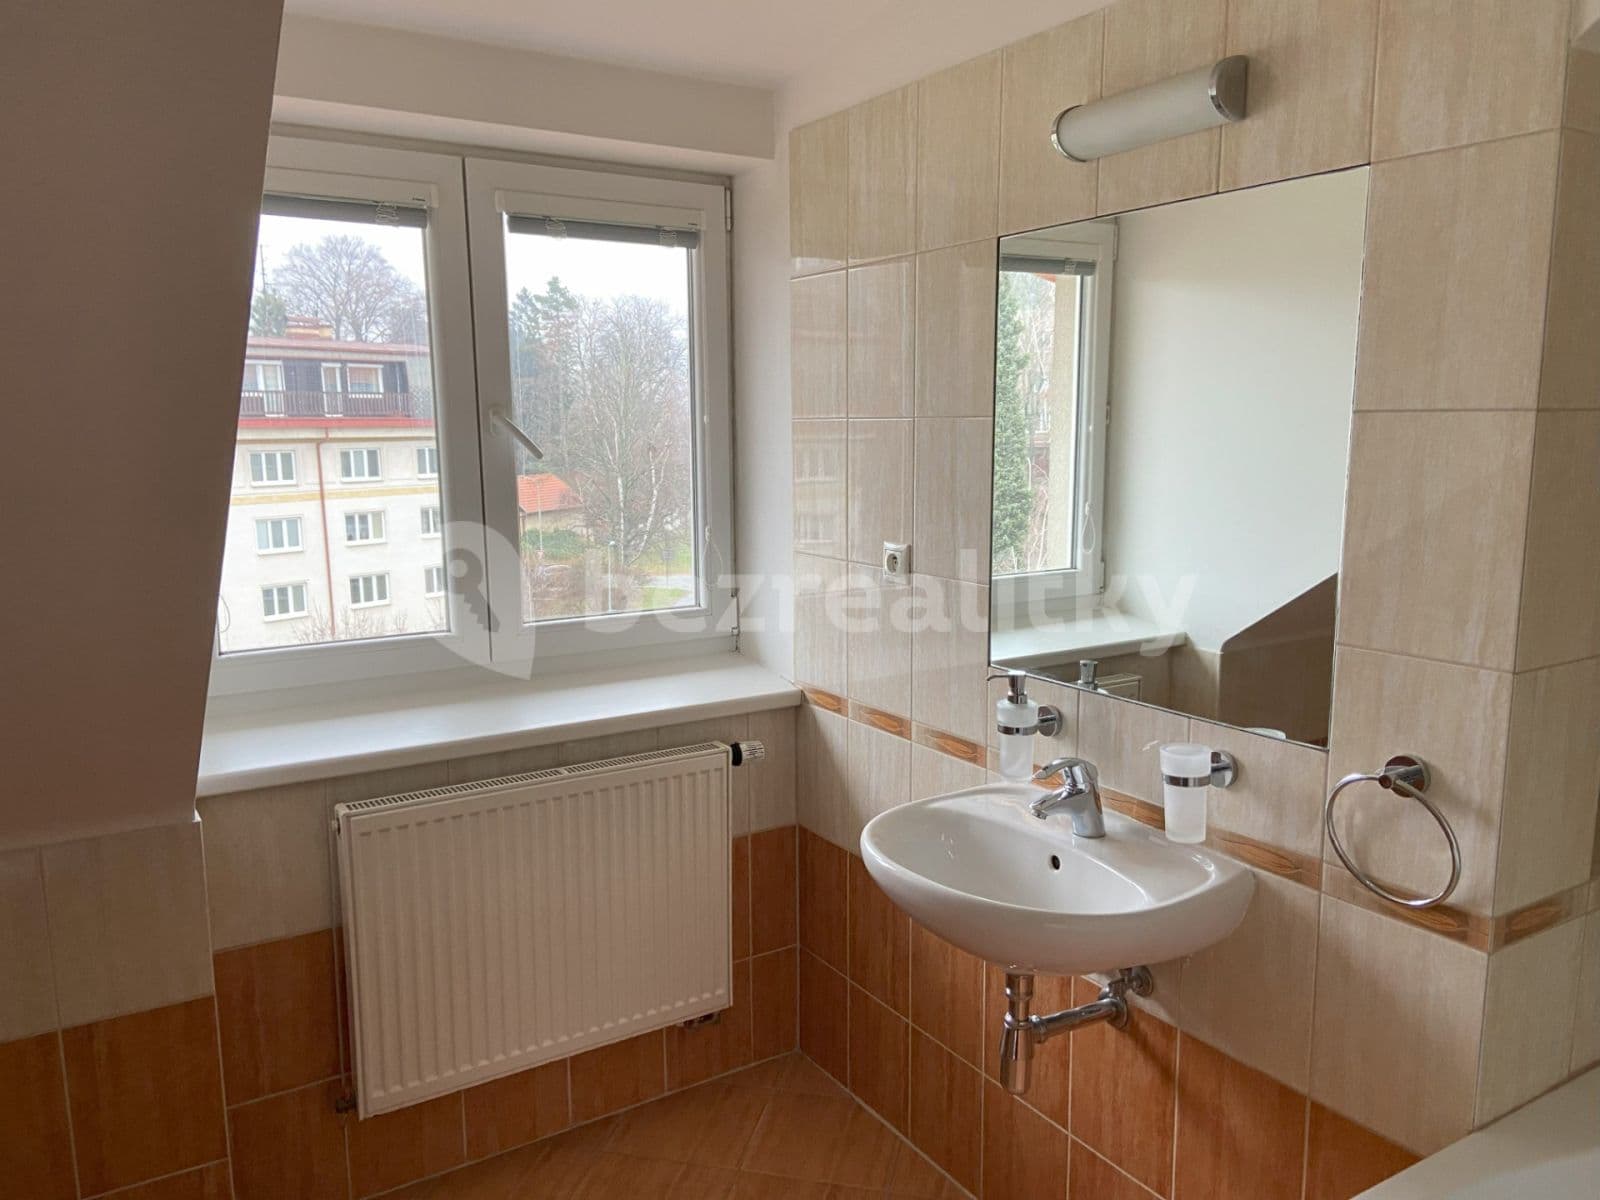 2 bedroom flat for sale, 55 m², Mydlářka, Prague, Prague